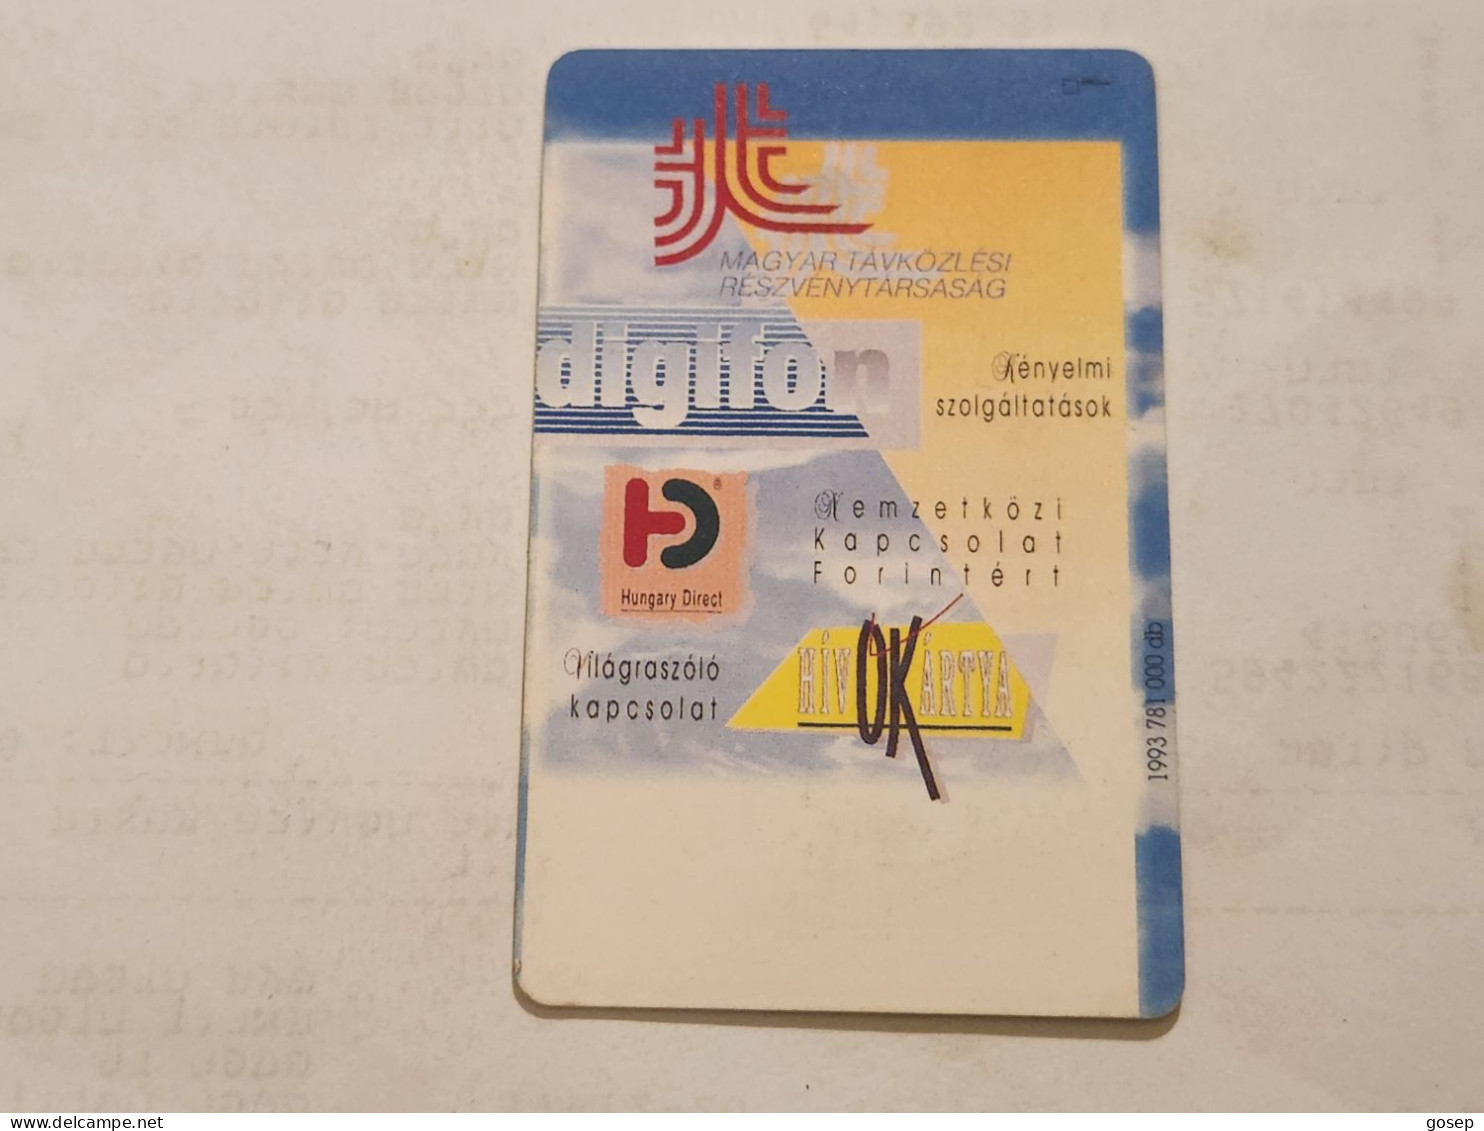 HUNGARY-(HU-P-1993-32Aa)-MATAV-(177)(500units)(11/93)(tirage-781.000)-USED CARD+1card Prepiad Free - Hongrie